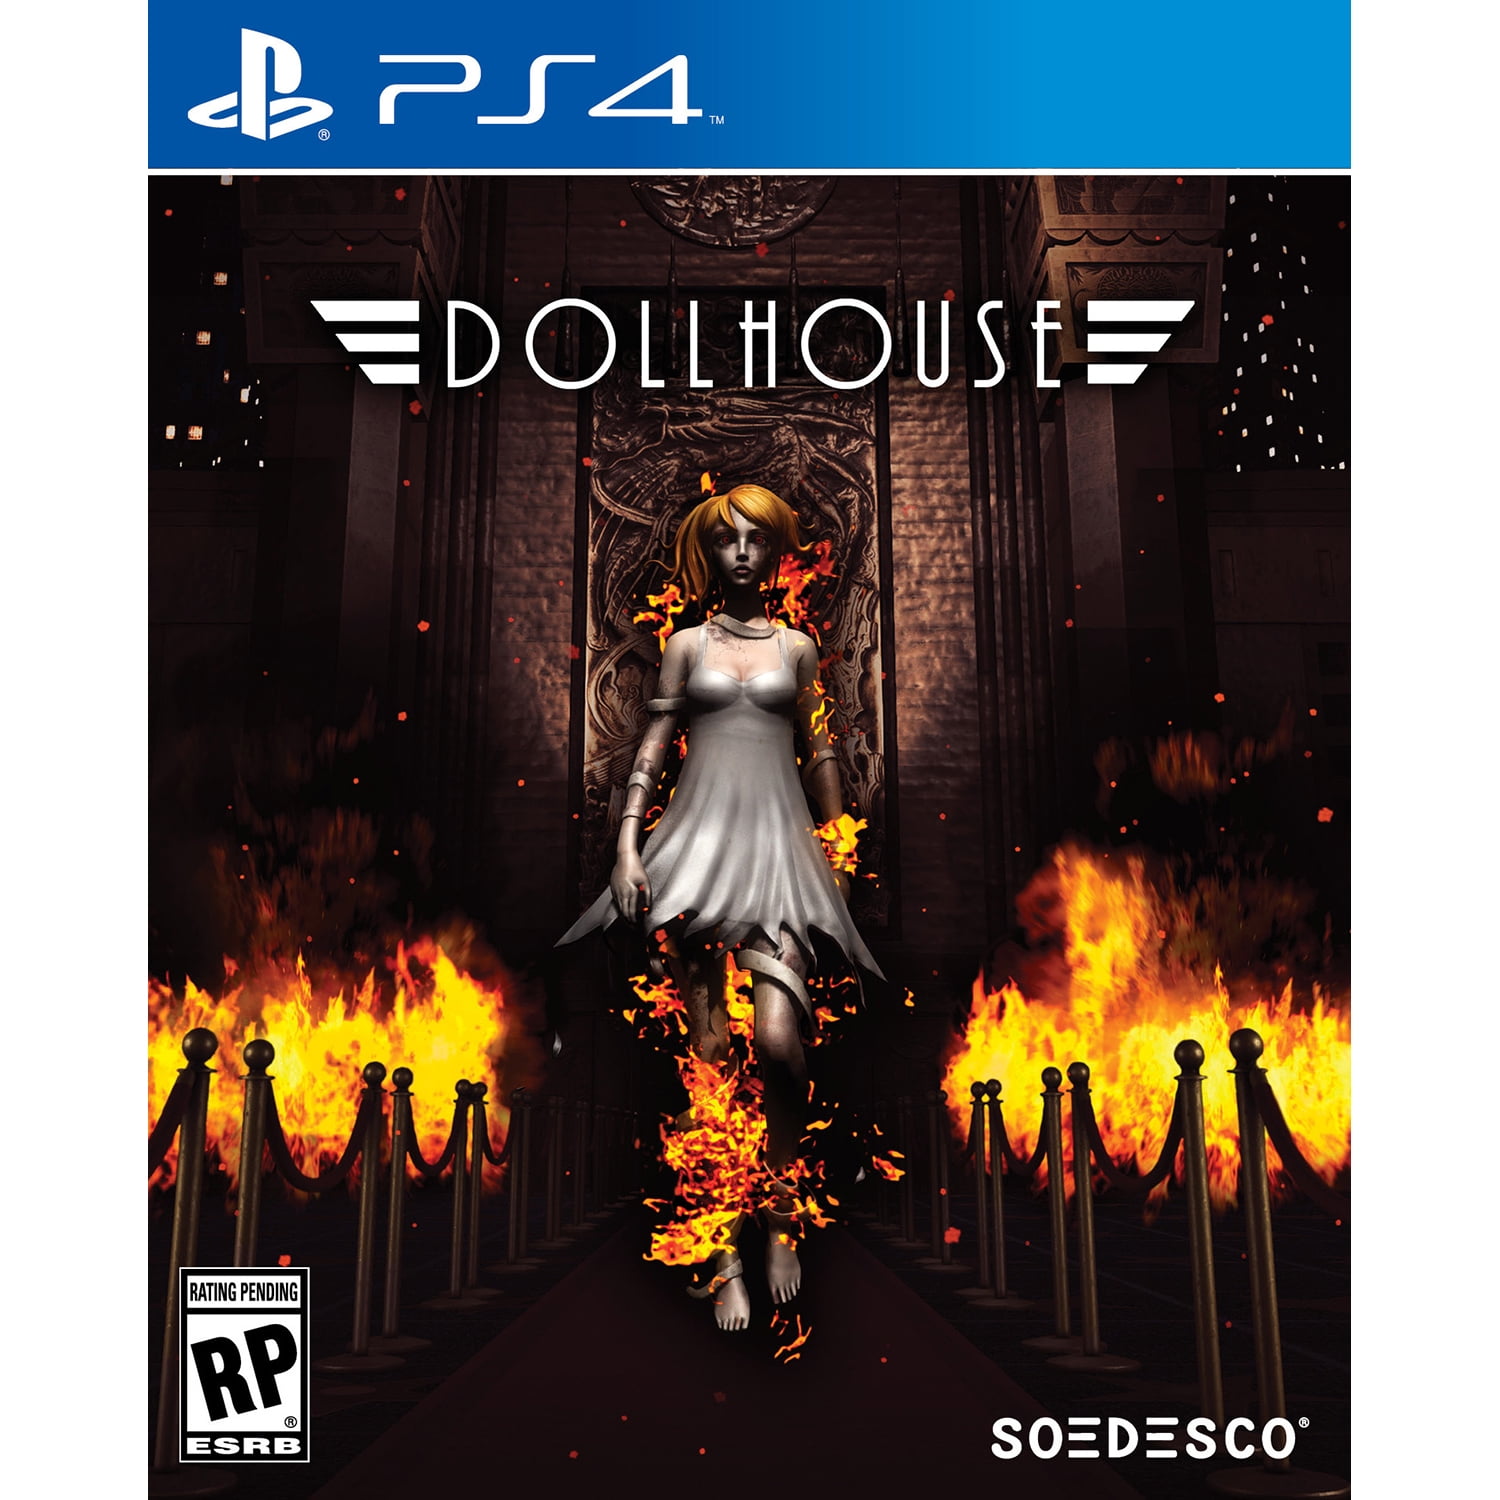 Dollhouse Soedesco Playstation 4 852103006461 Walmart